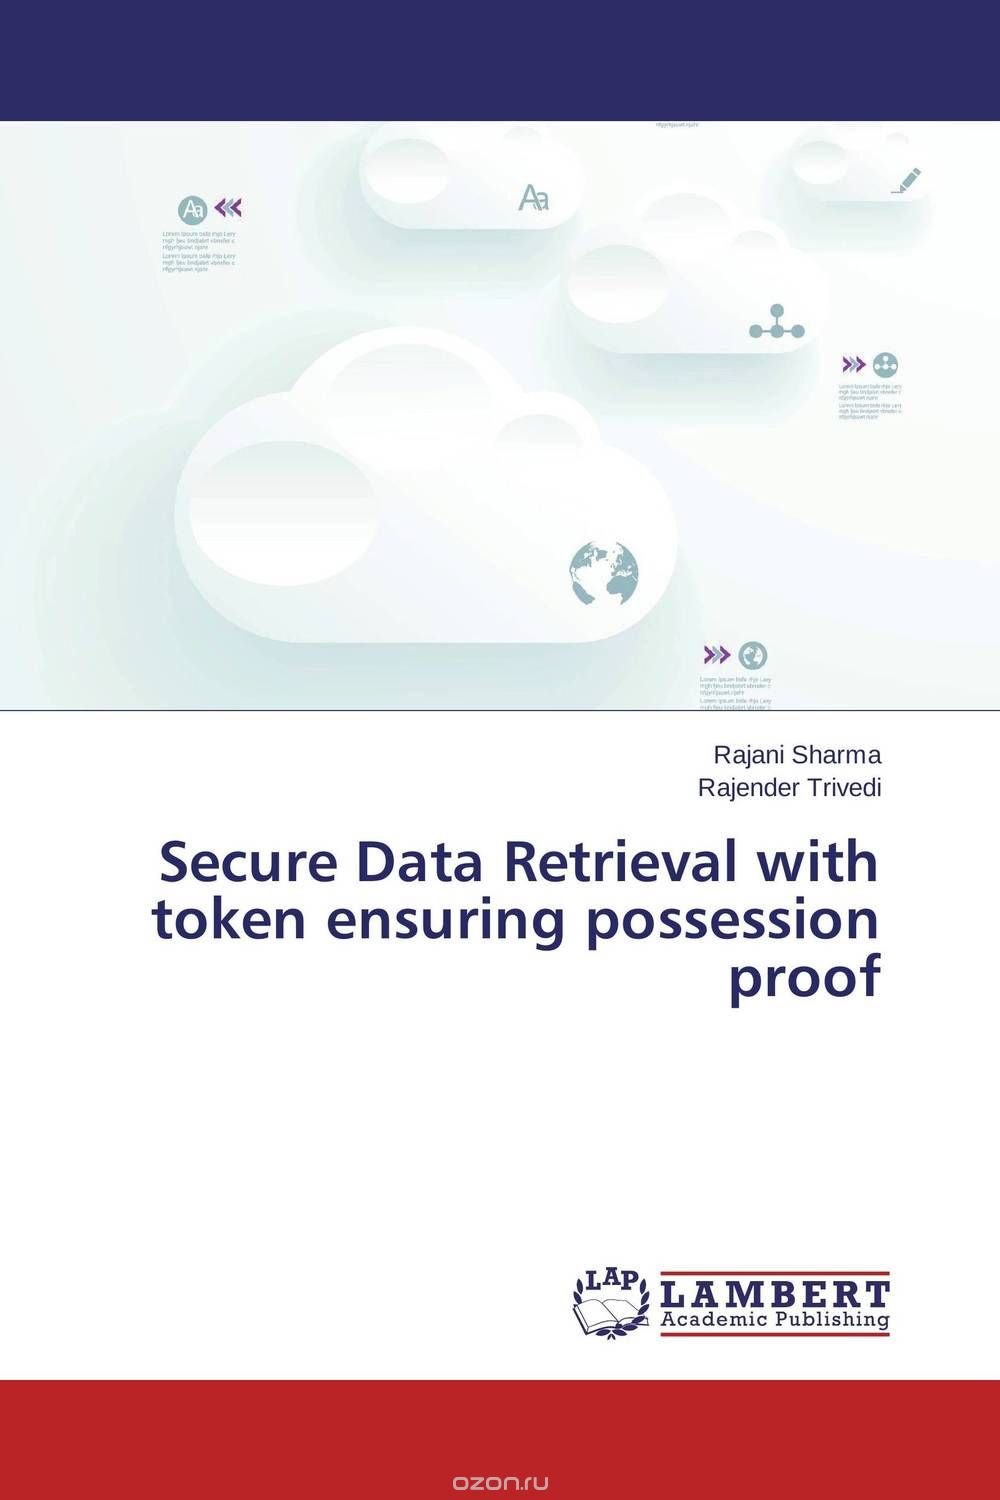 Скачать книгу "Secure Data Retrieval with token ensuring possession proof"